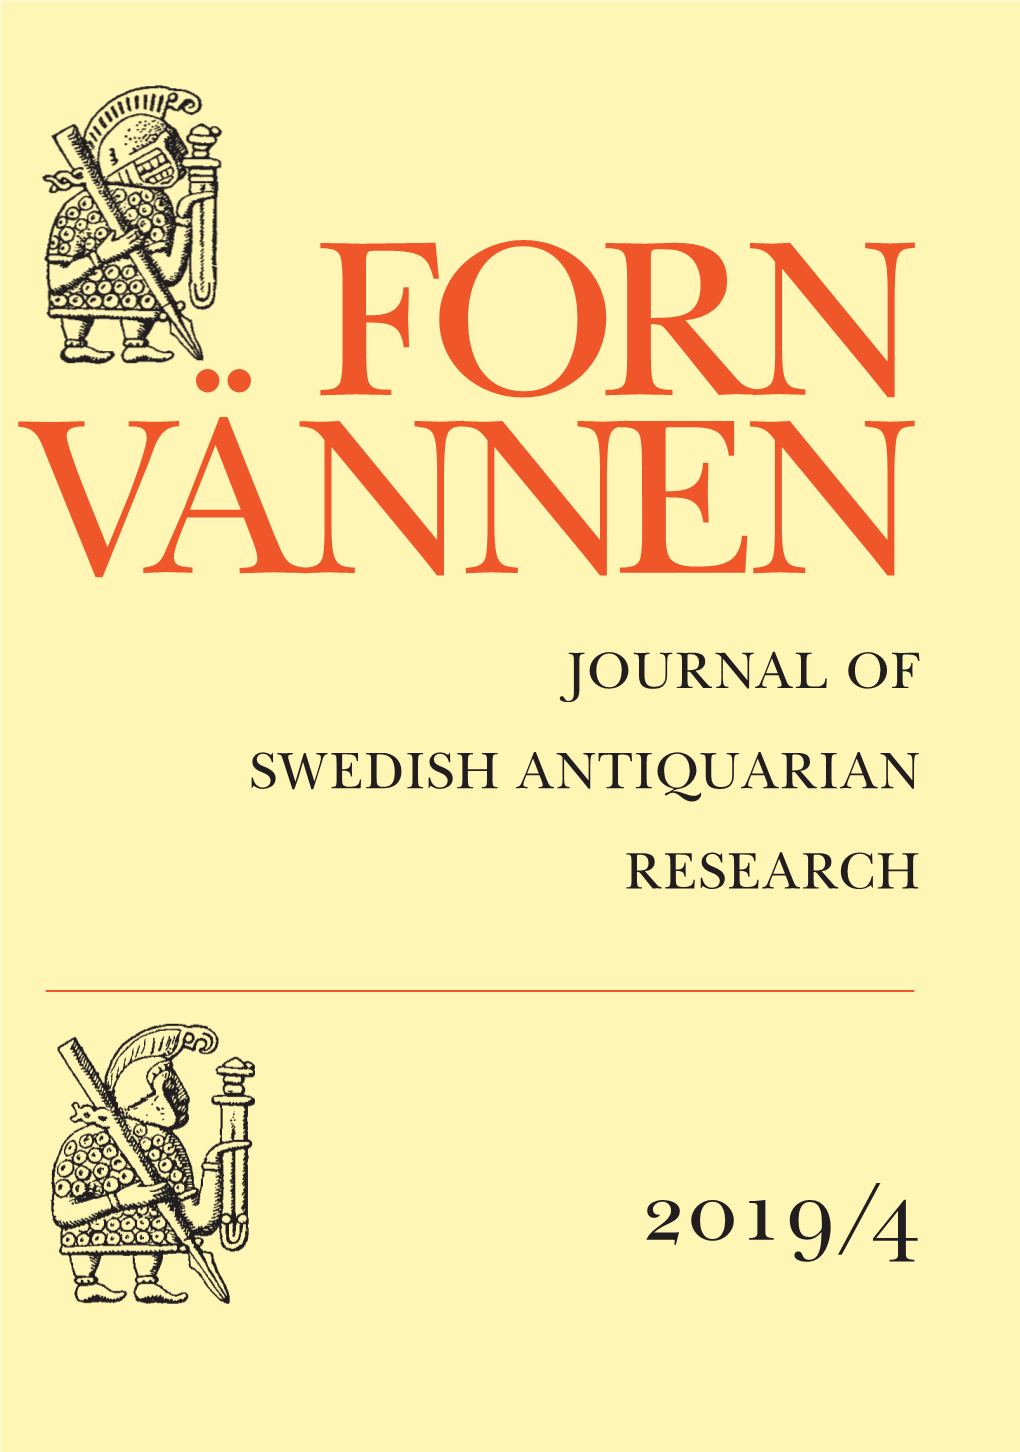 Errett Callahan (1937–2019) and His Impact on Swedish Archaeology